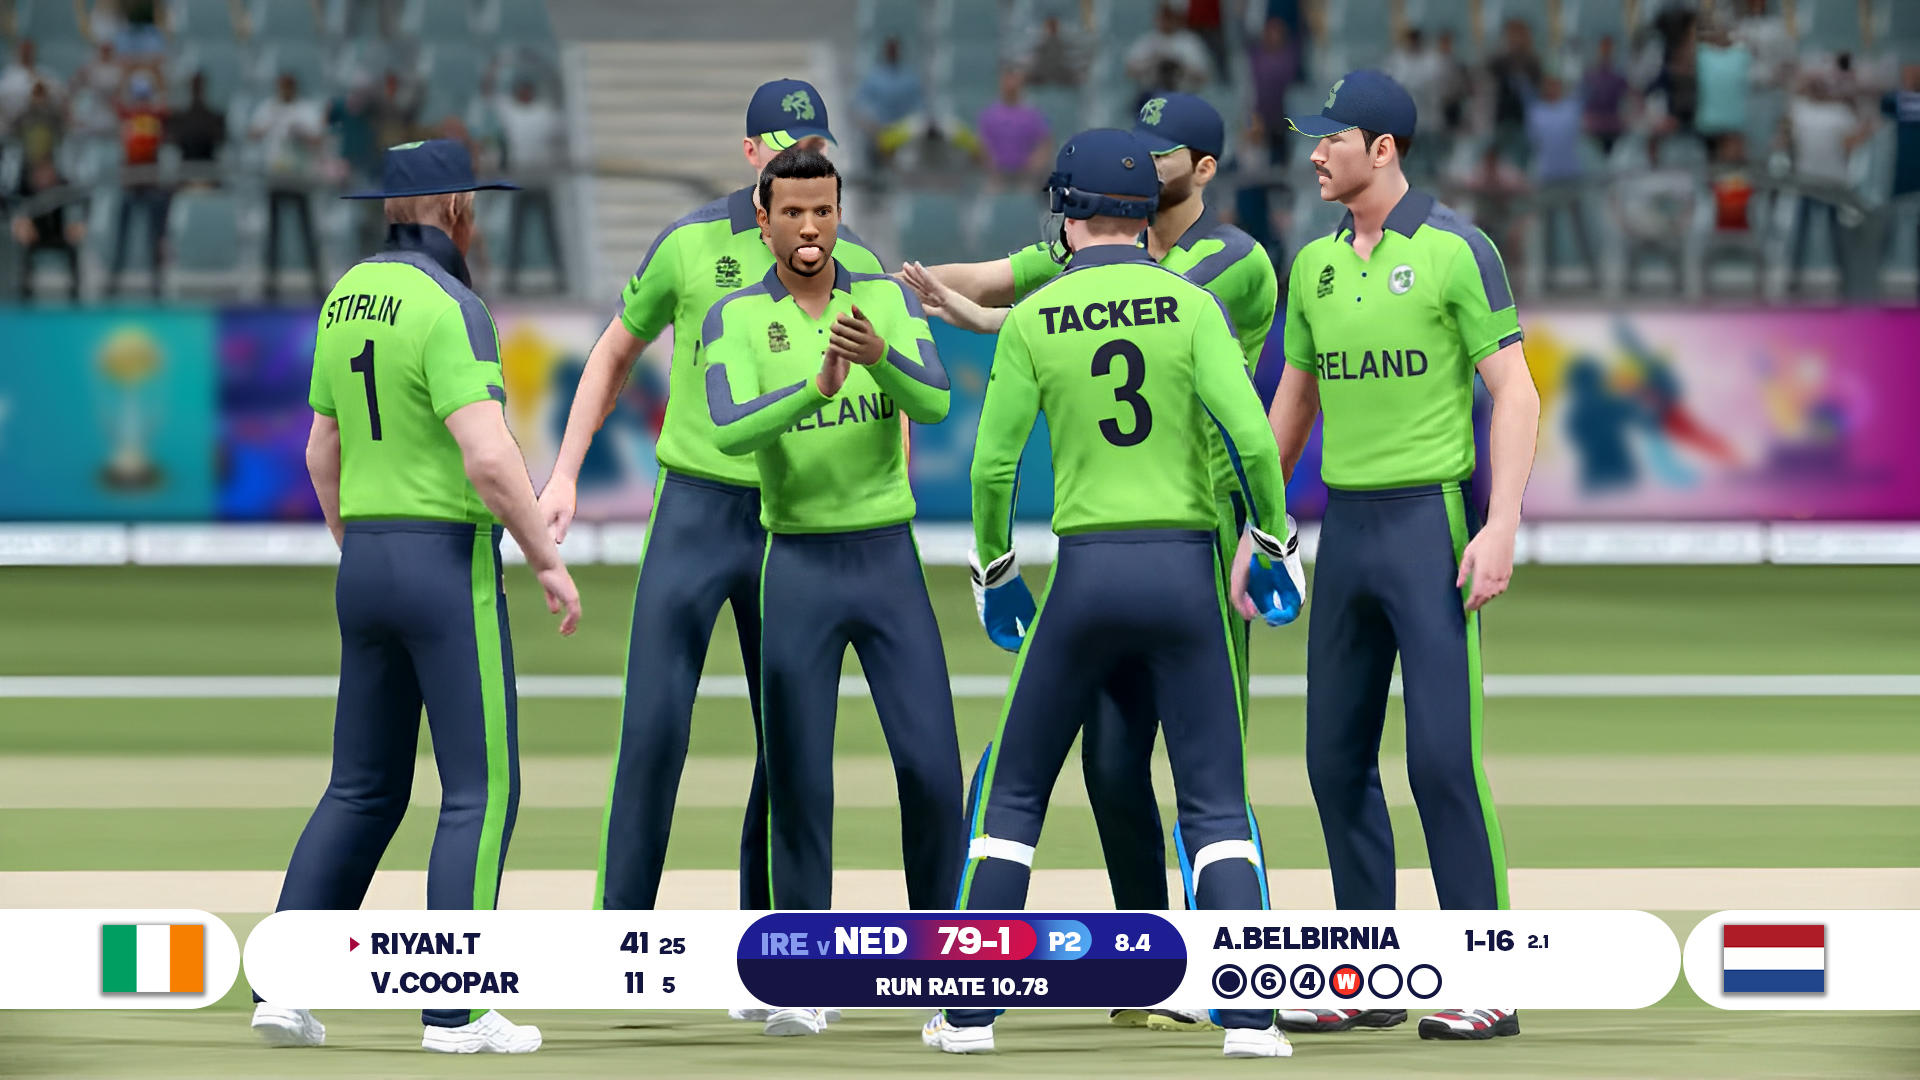 Screenshot of Real T20 Cricket Games